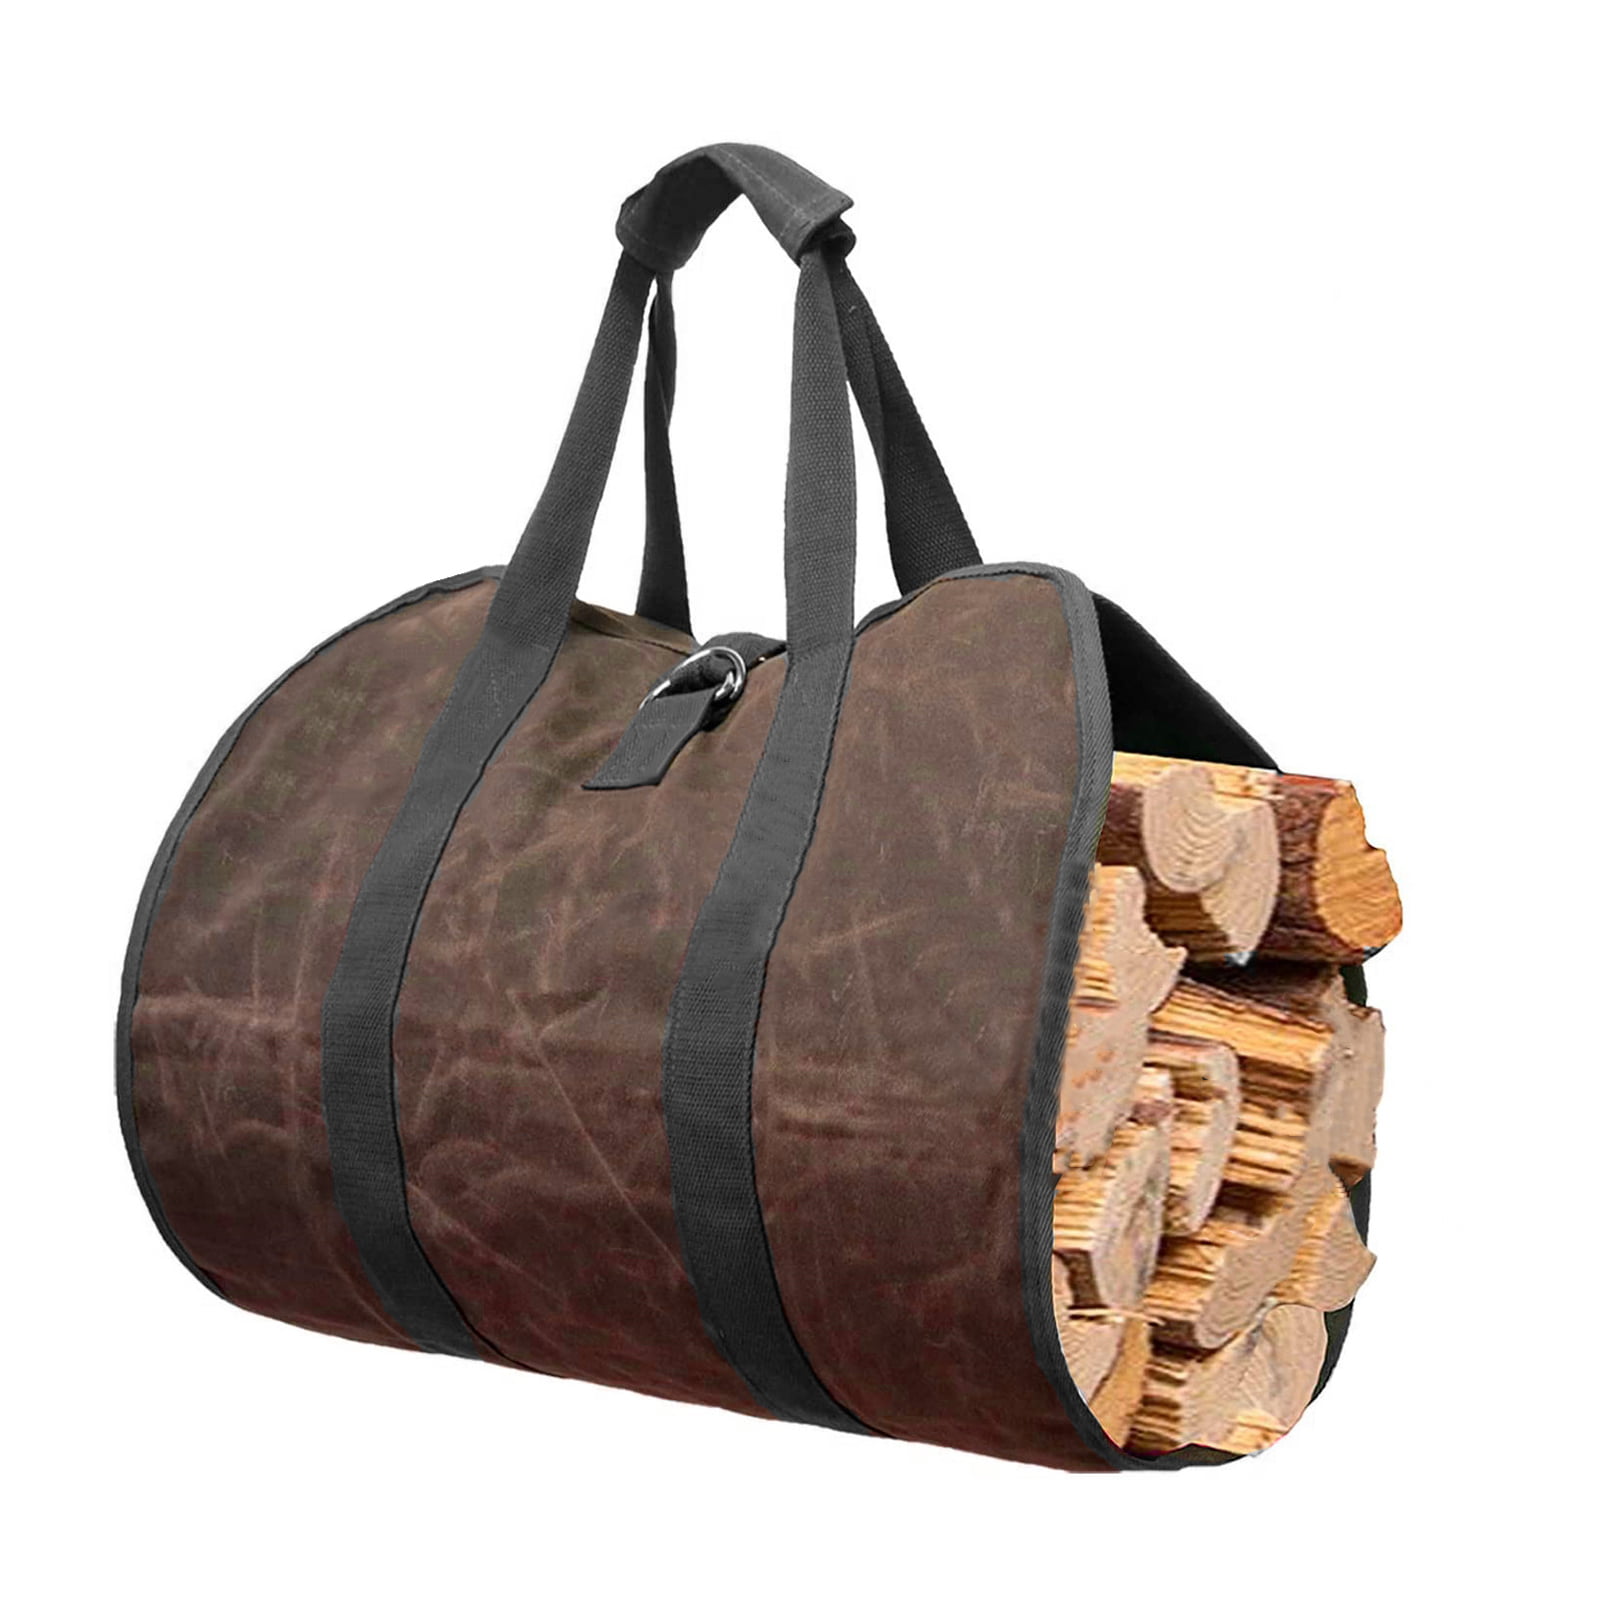 Large Wood Storage Bag Hete-supply Portable Firewood Carrier Canvas Tote Firewood Holder Bags With Padded Handle & Shoulder Strap Black Log Carrier Bag